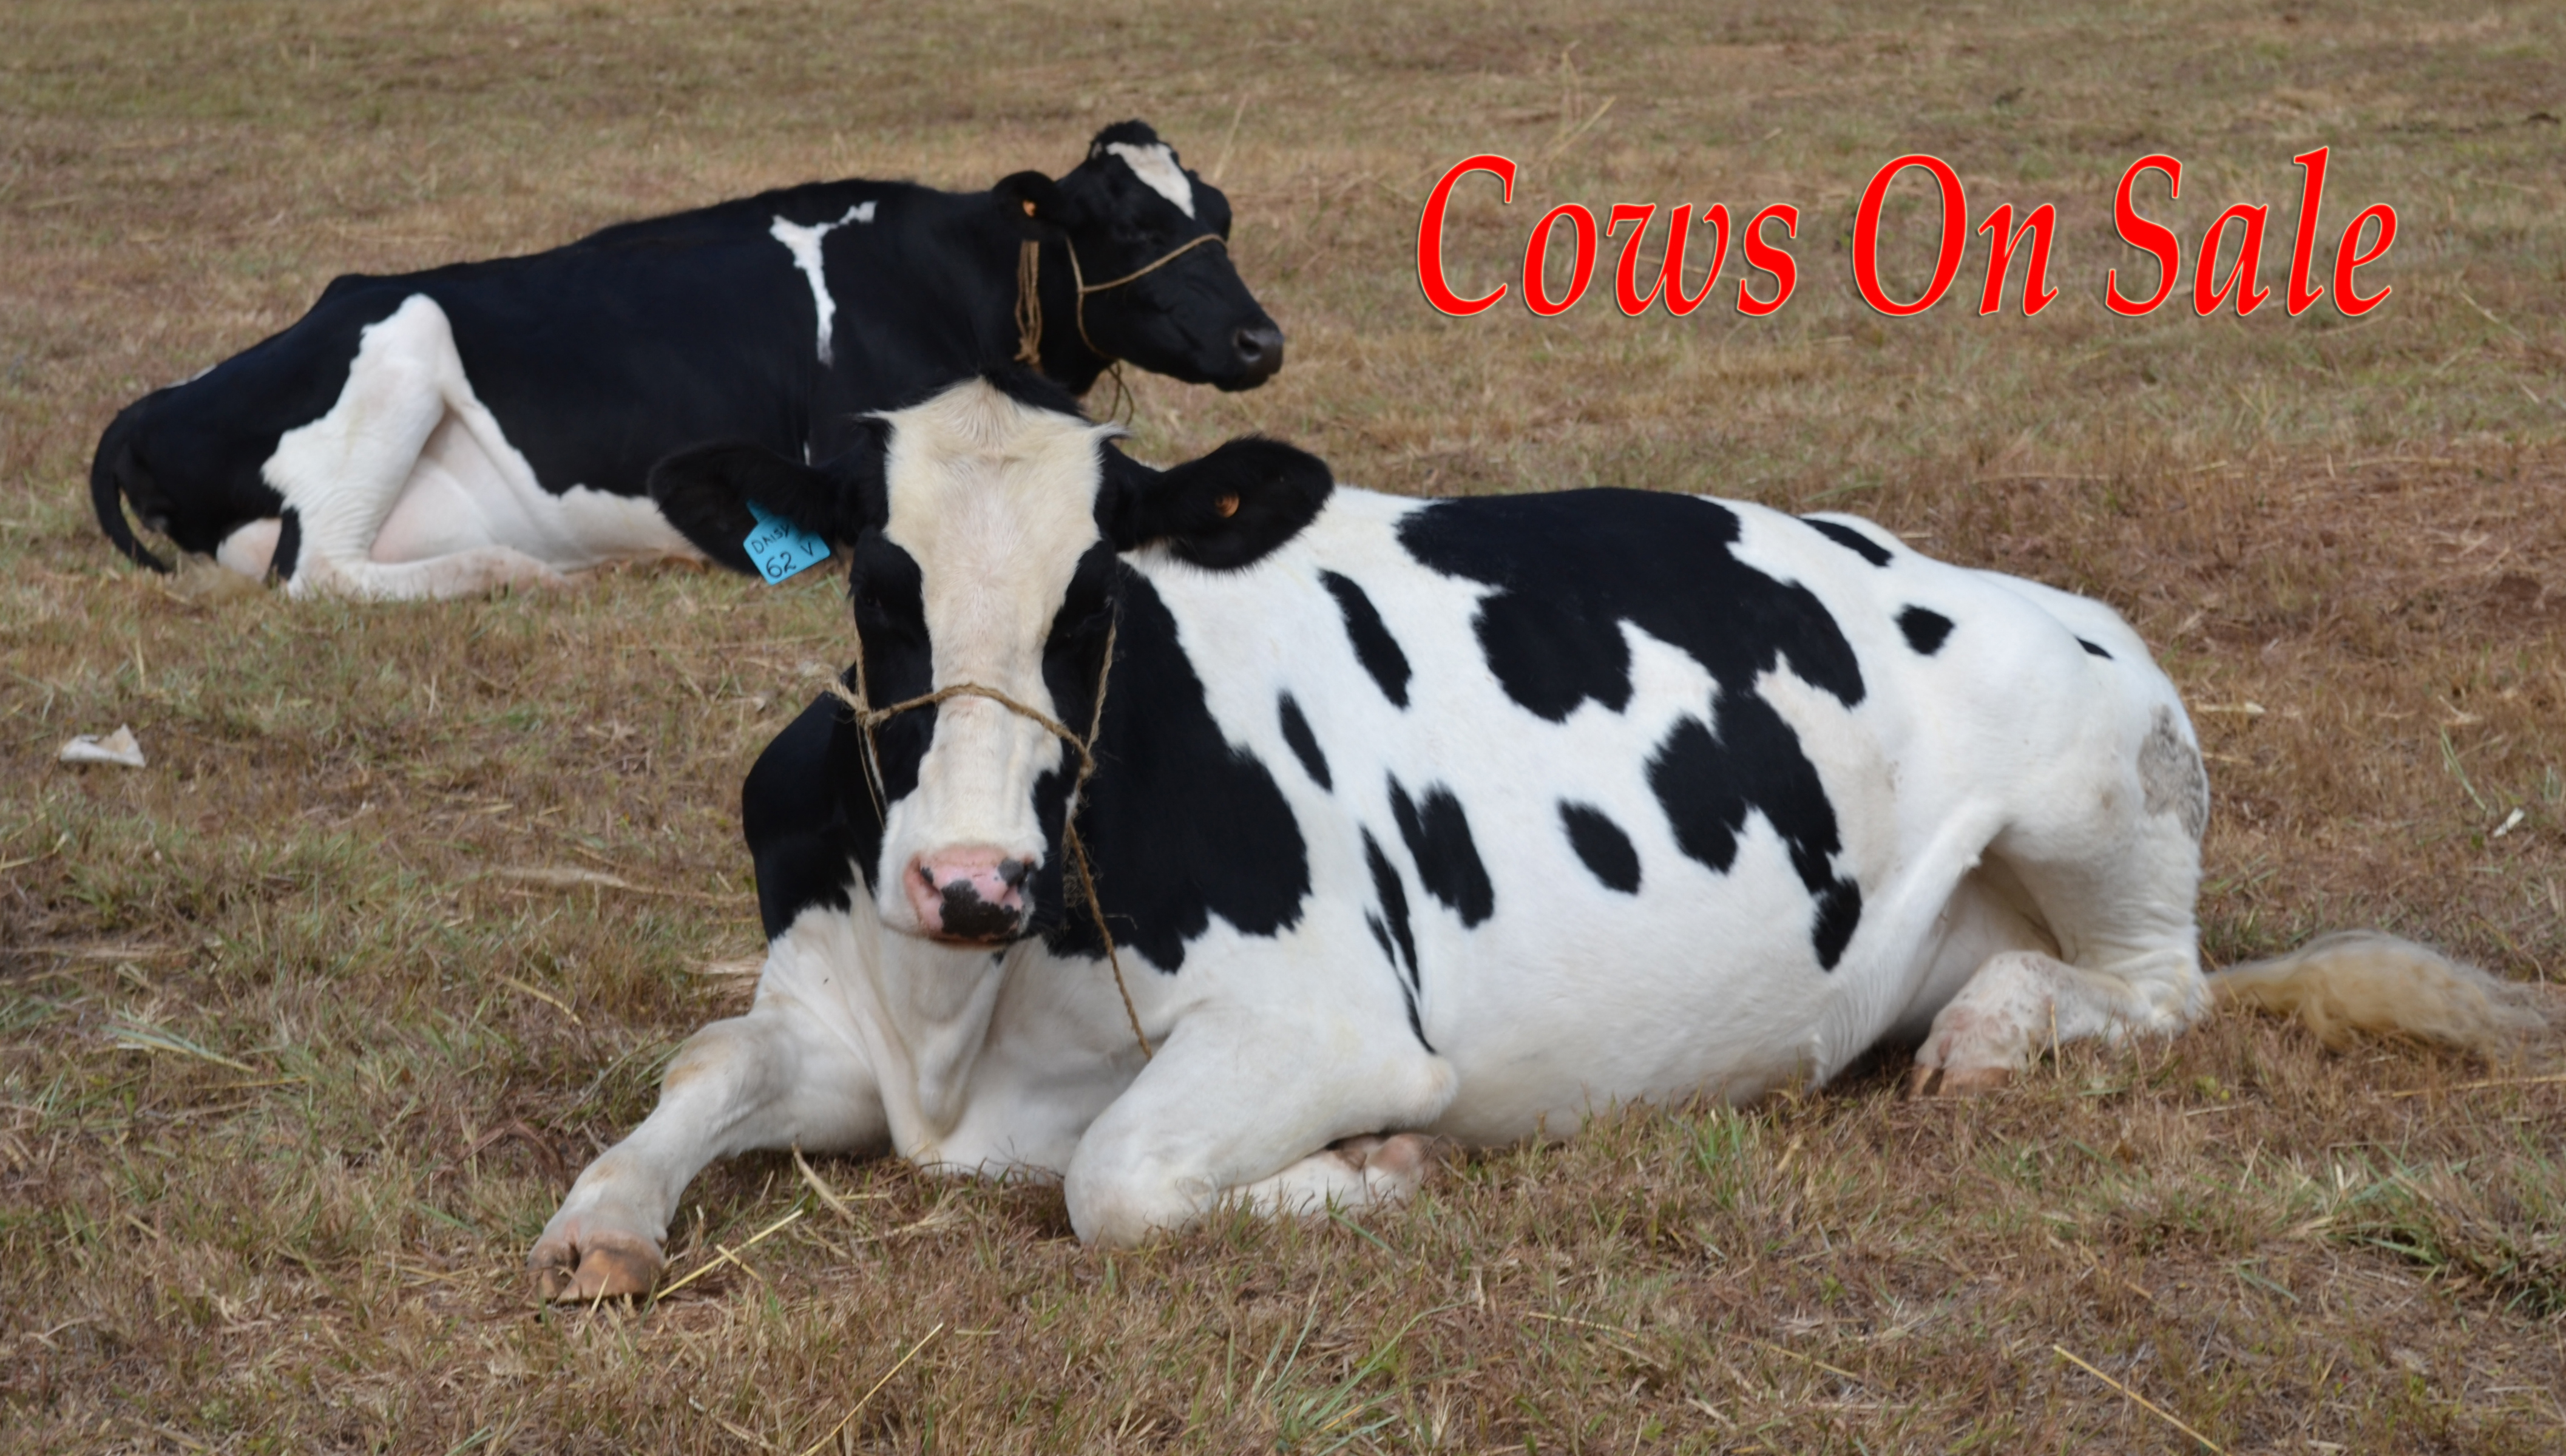 Dairy Cows for Sale in Kenya  cellfam